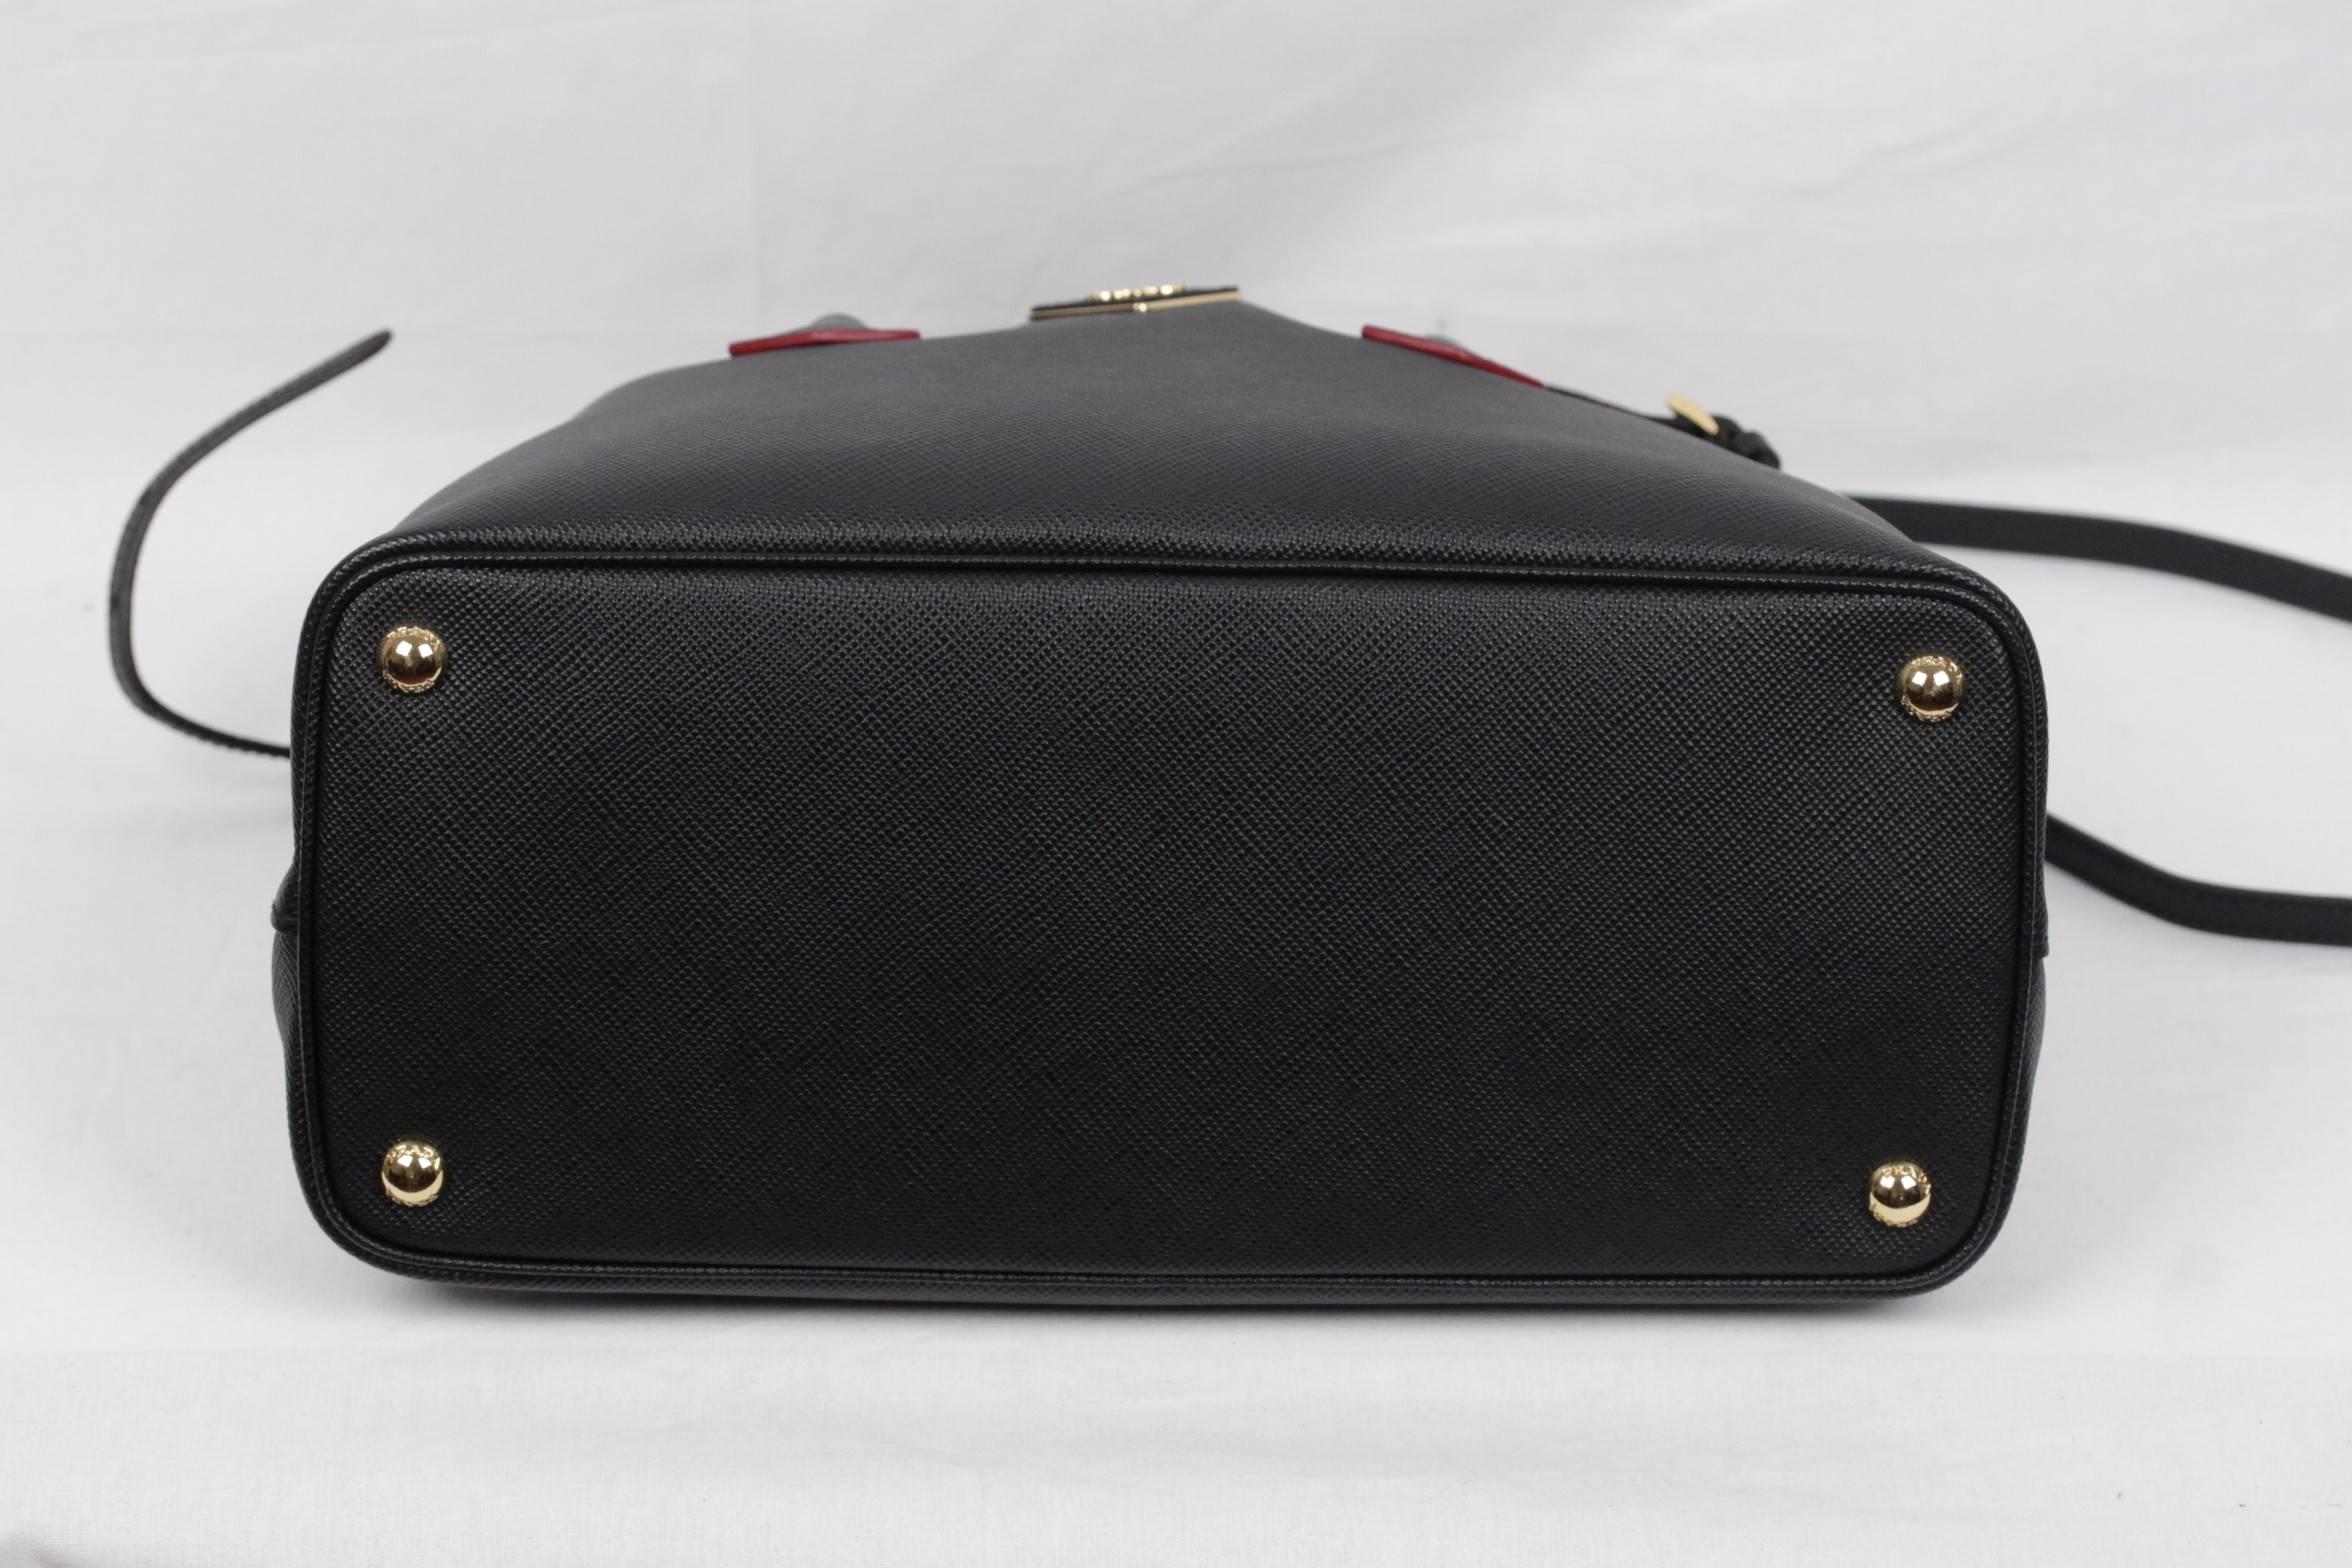 PRADA Black SAFFIANO CUIR Leather DOUBLE BAG Tote Satchel 1BG775 3